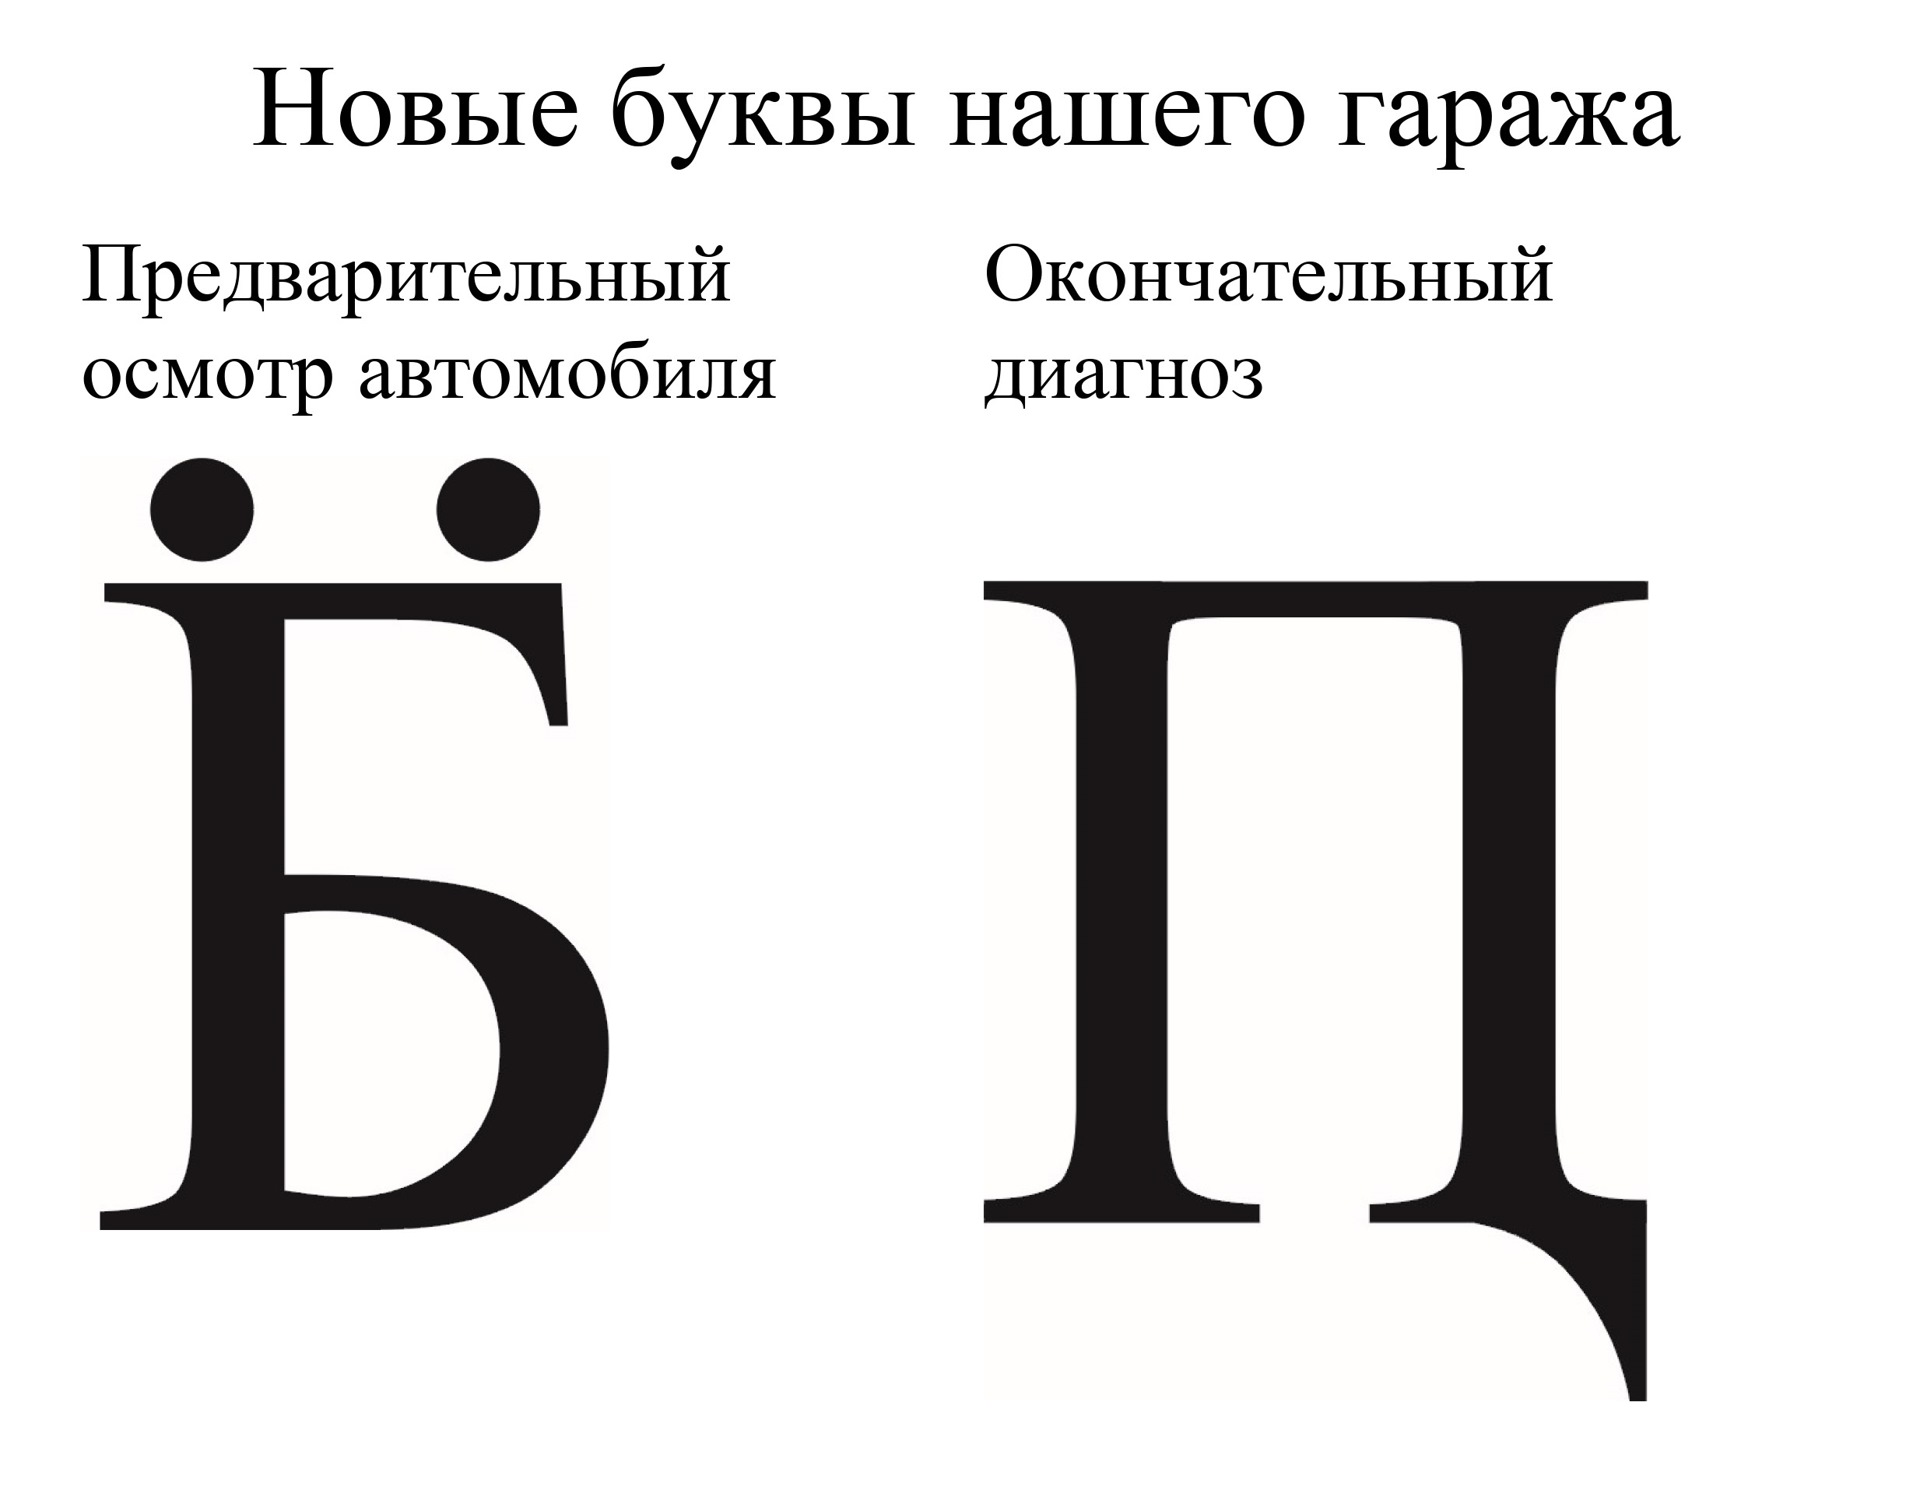 T е п п. Новая буква. Новая буква в русском алфавите. Самая новая буква русского алфавита. Новая буква алфавита б.